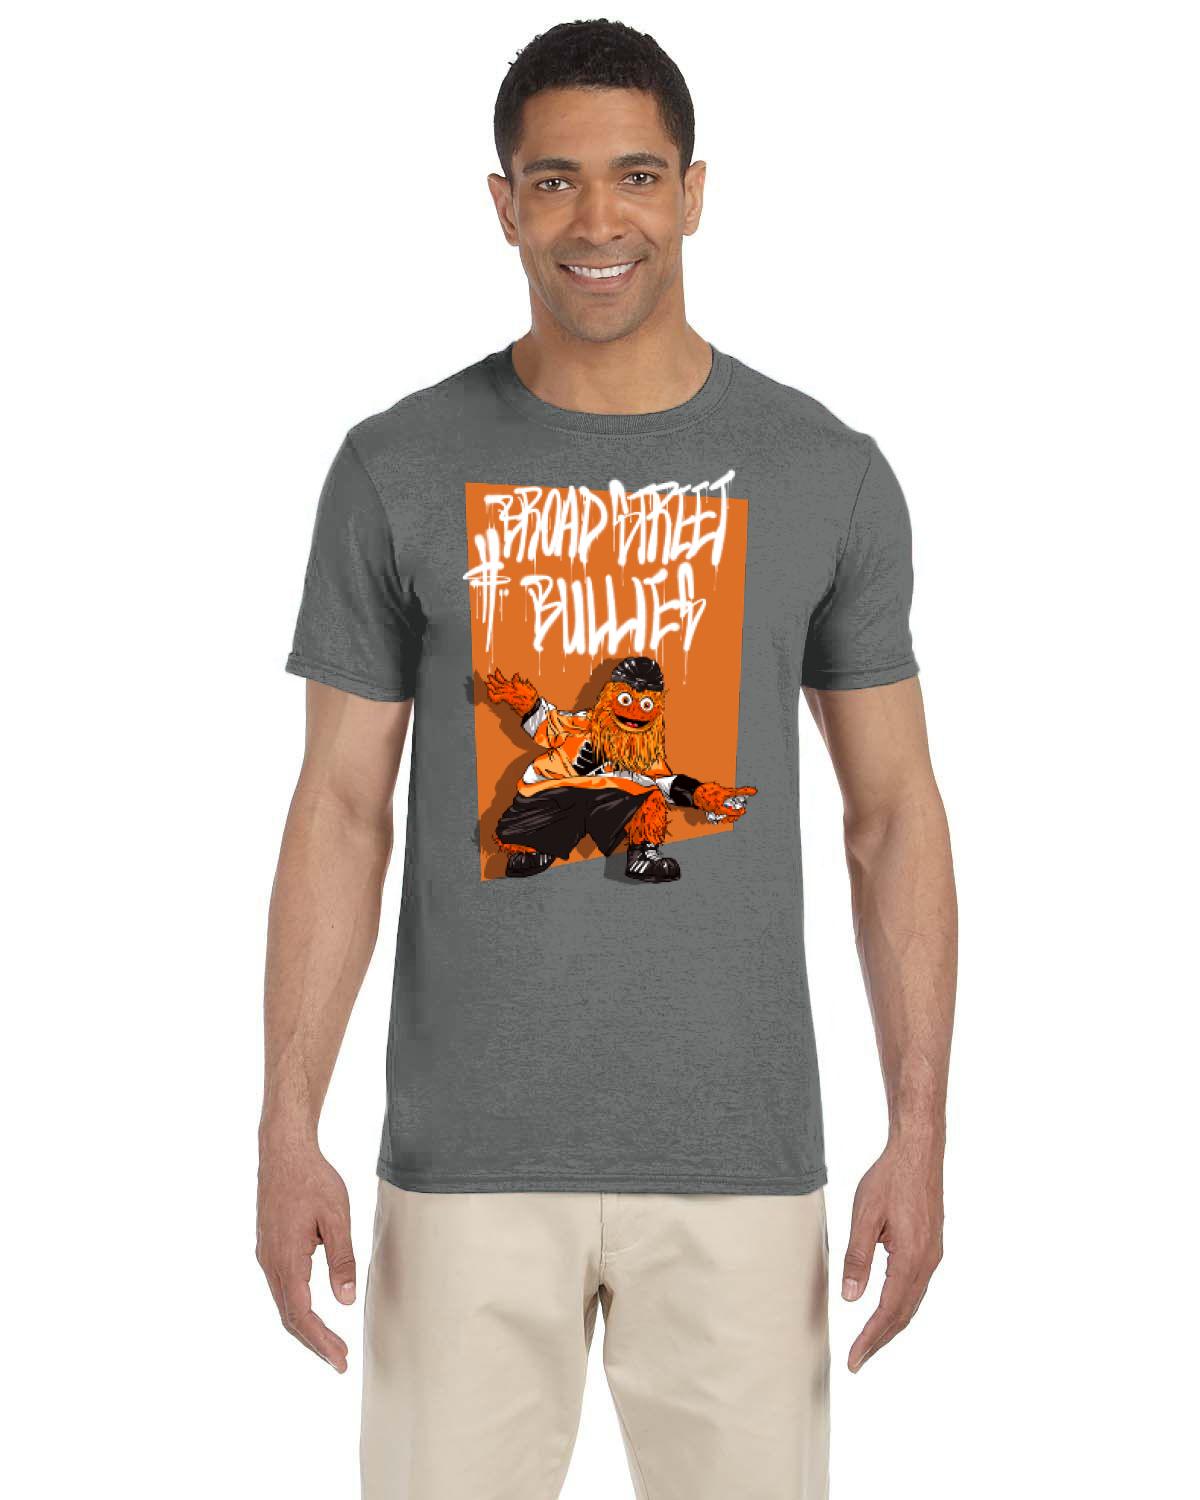 Broad Street Bullies Tee (Gildan Adult Softstyle 7.5 oz./lin. yd. T-Shirt | G640)